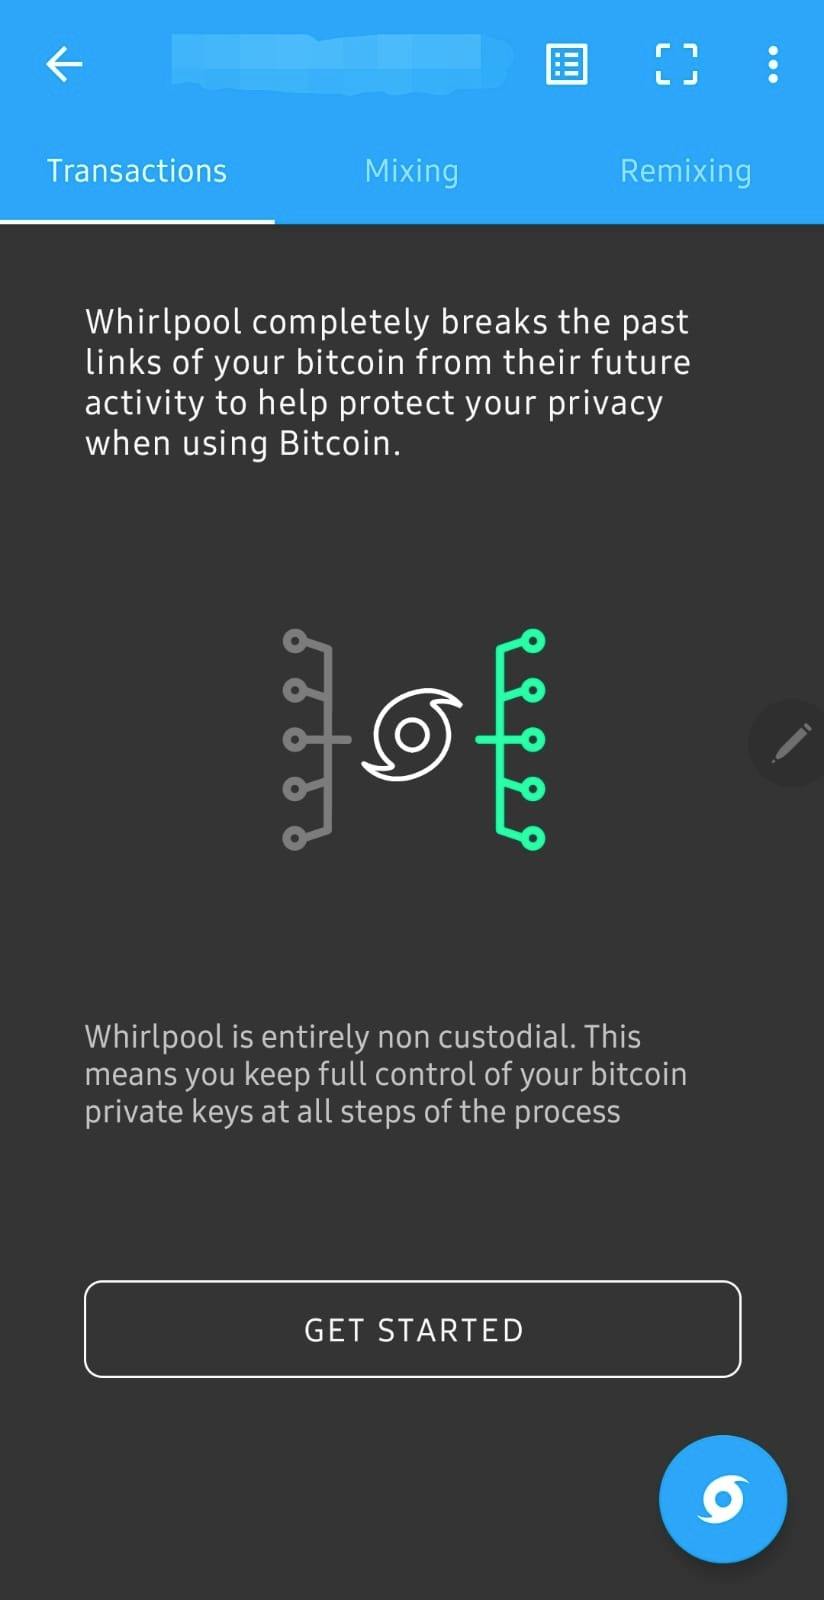 How to use samurai wallet mix bitcoin